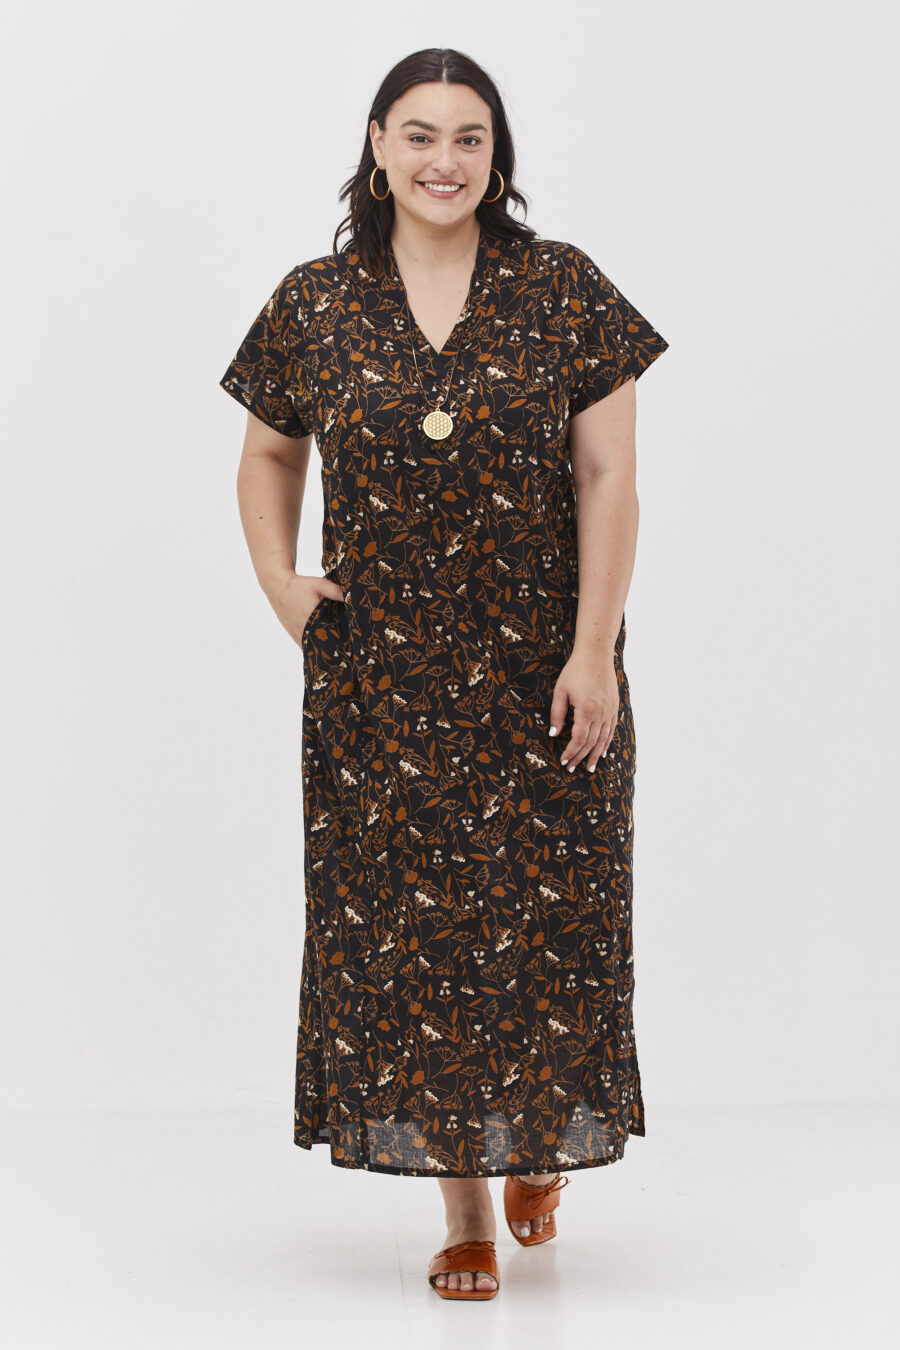 Jalabiya dress | Uniquely designed dress – Waltz print, black dress with light brown leafs and white flowers print.